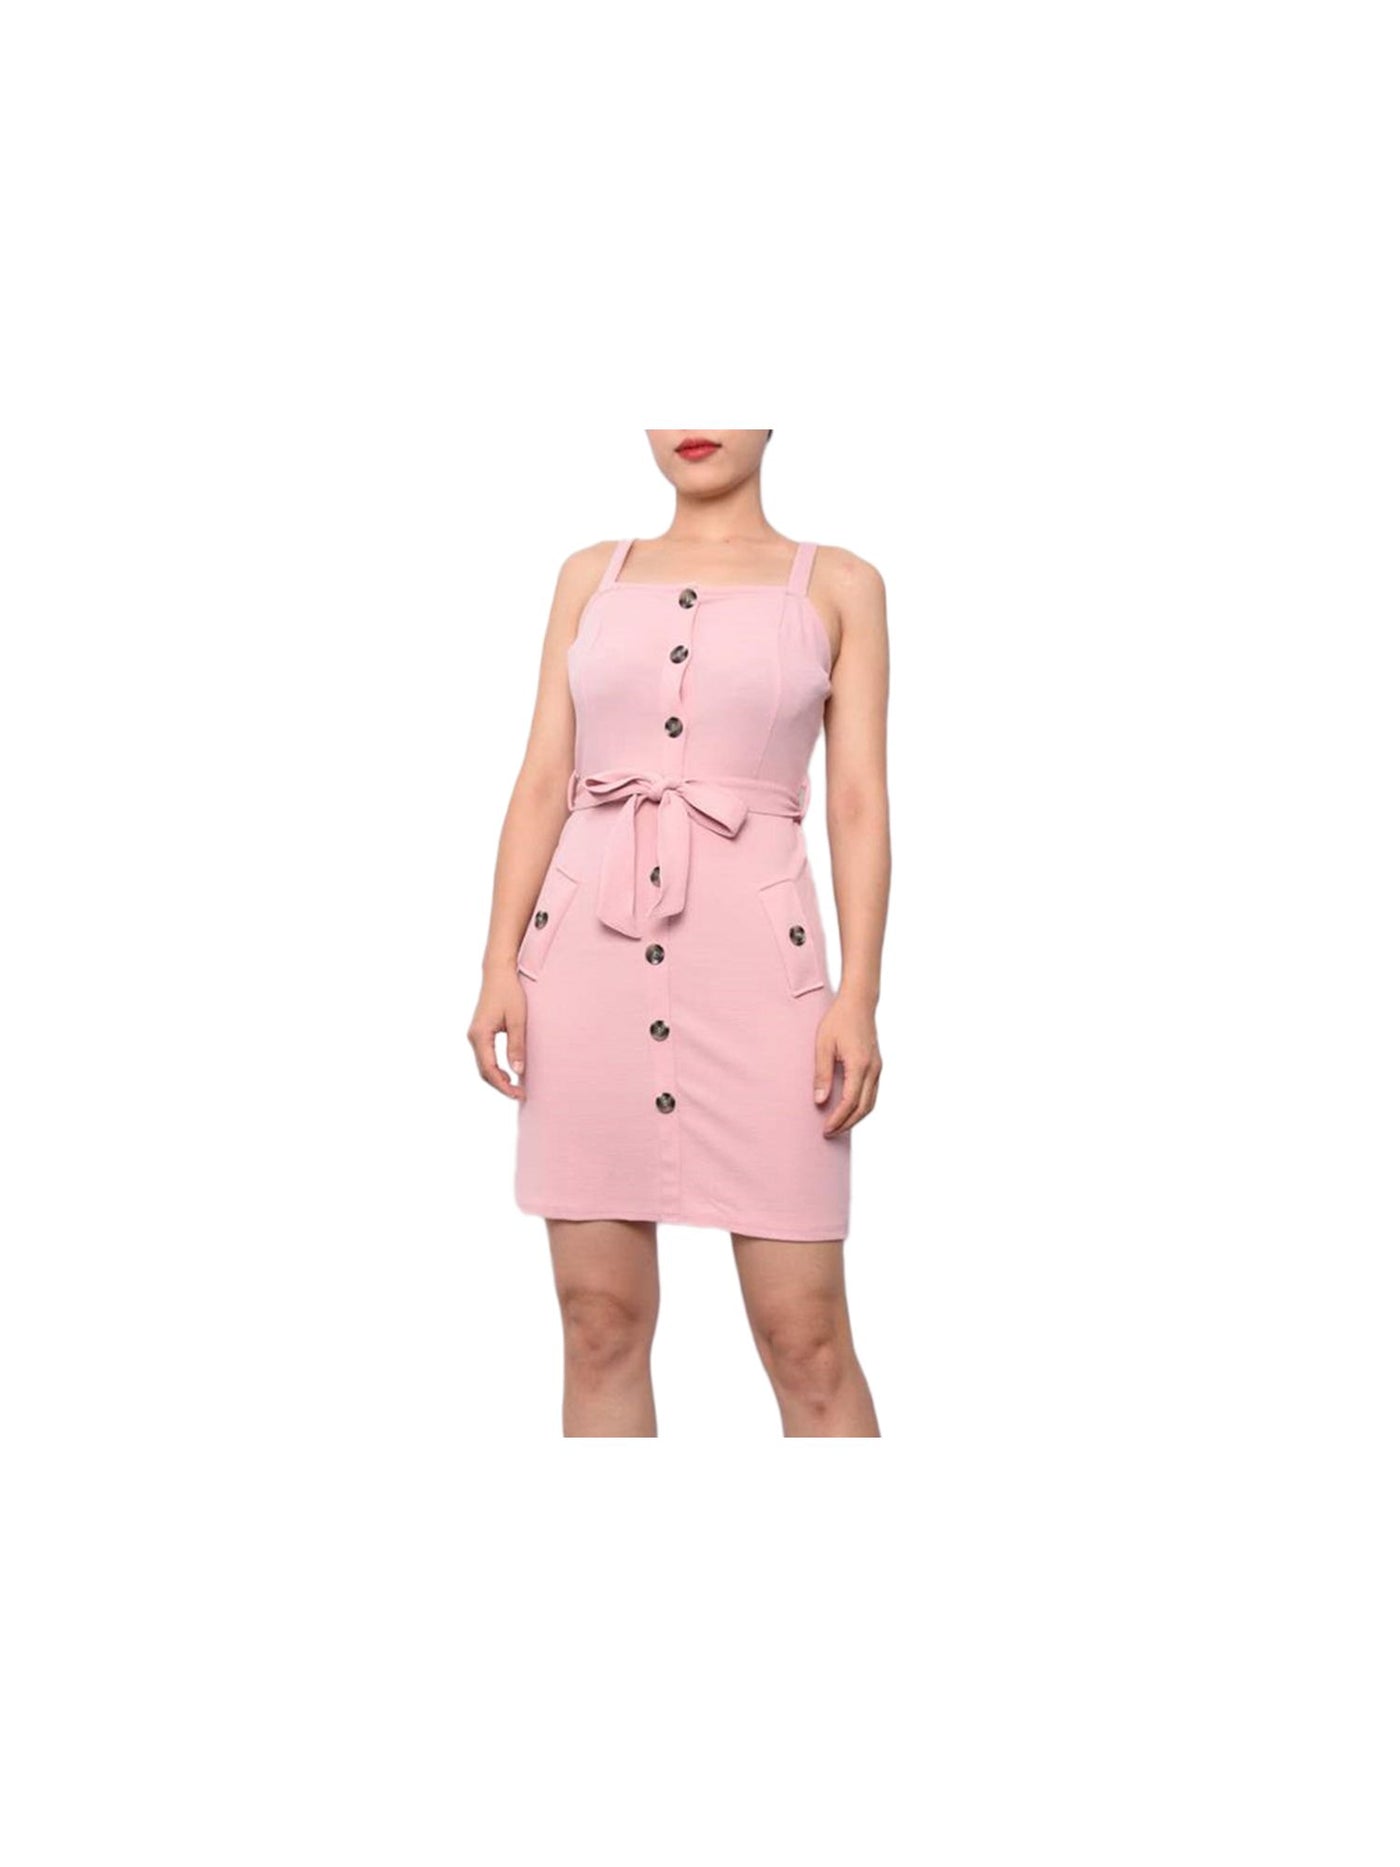 DEREK HEART Womens Pink Belted Sleeveless Square Neck Short Sheath Dress Juniors S